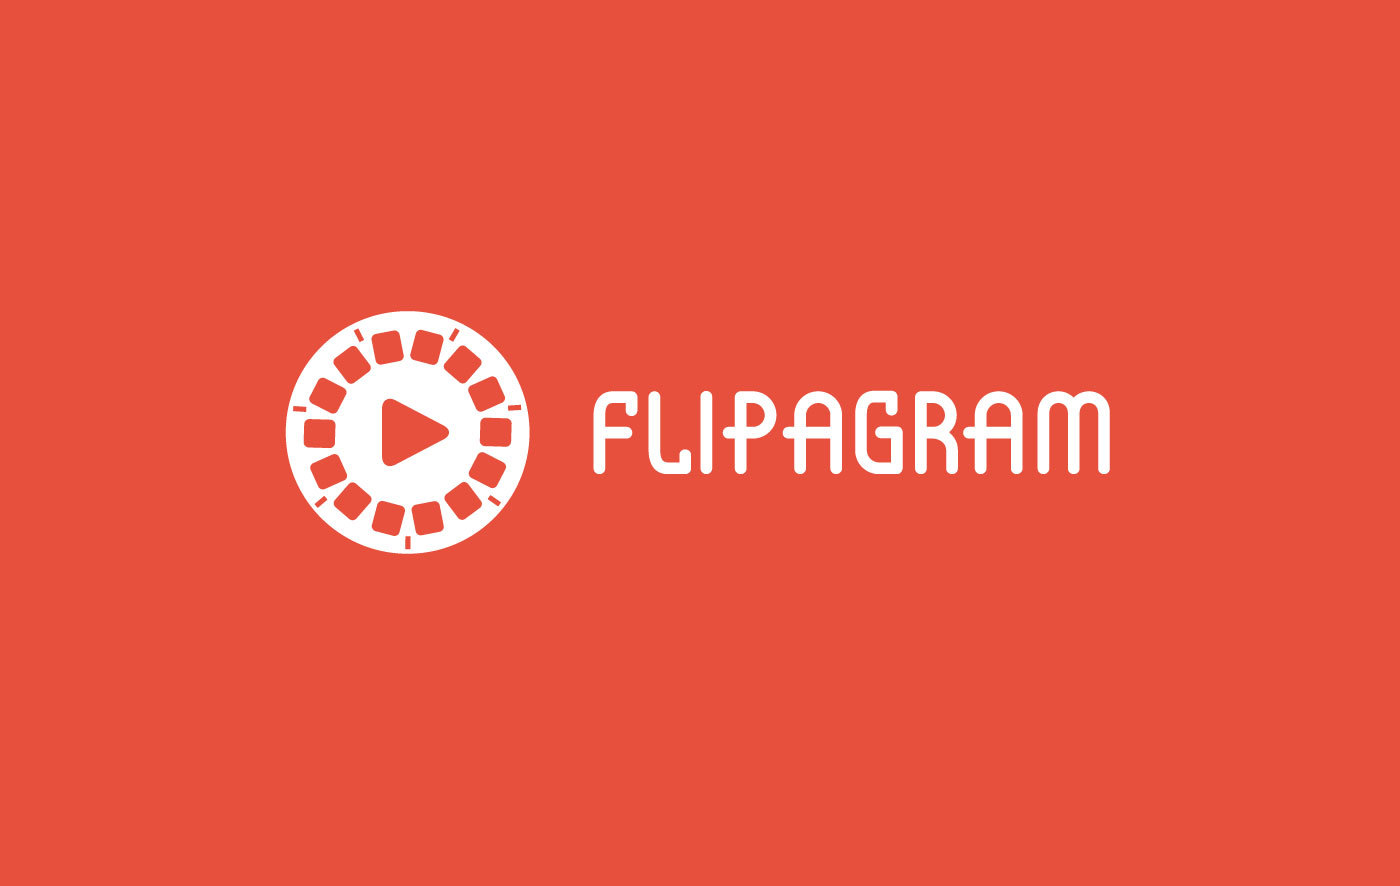 Flipagram Brand Identity / Logo by Sabet Brands, Inc.